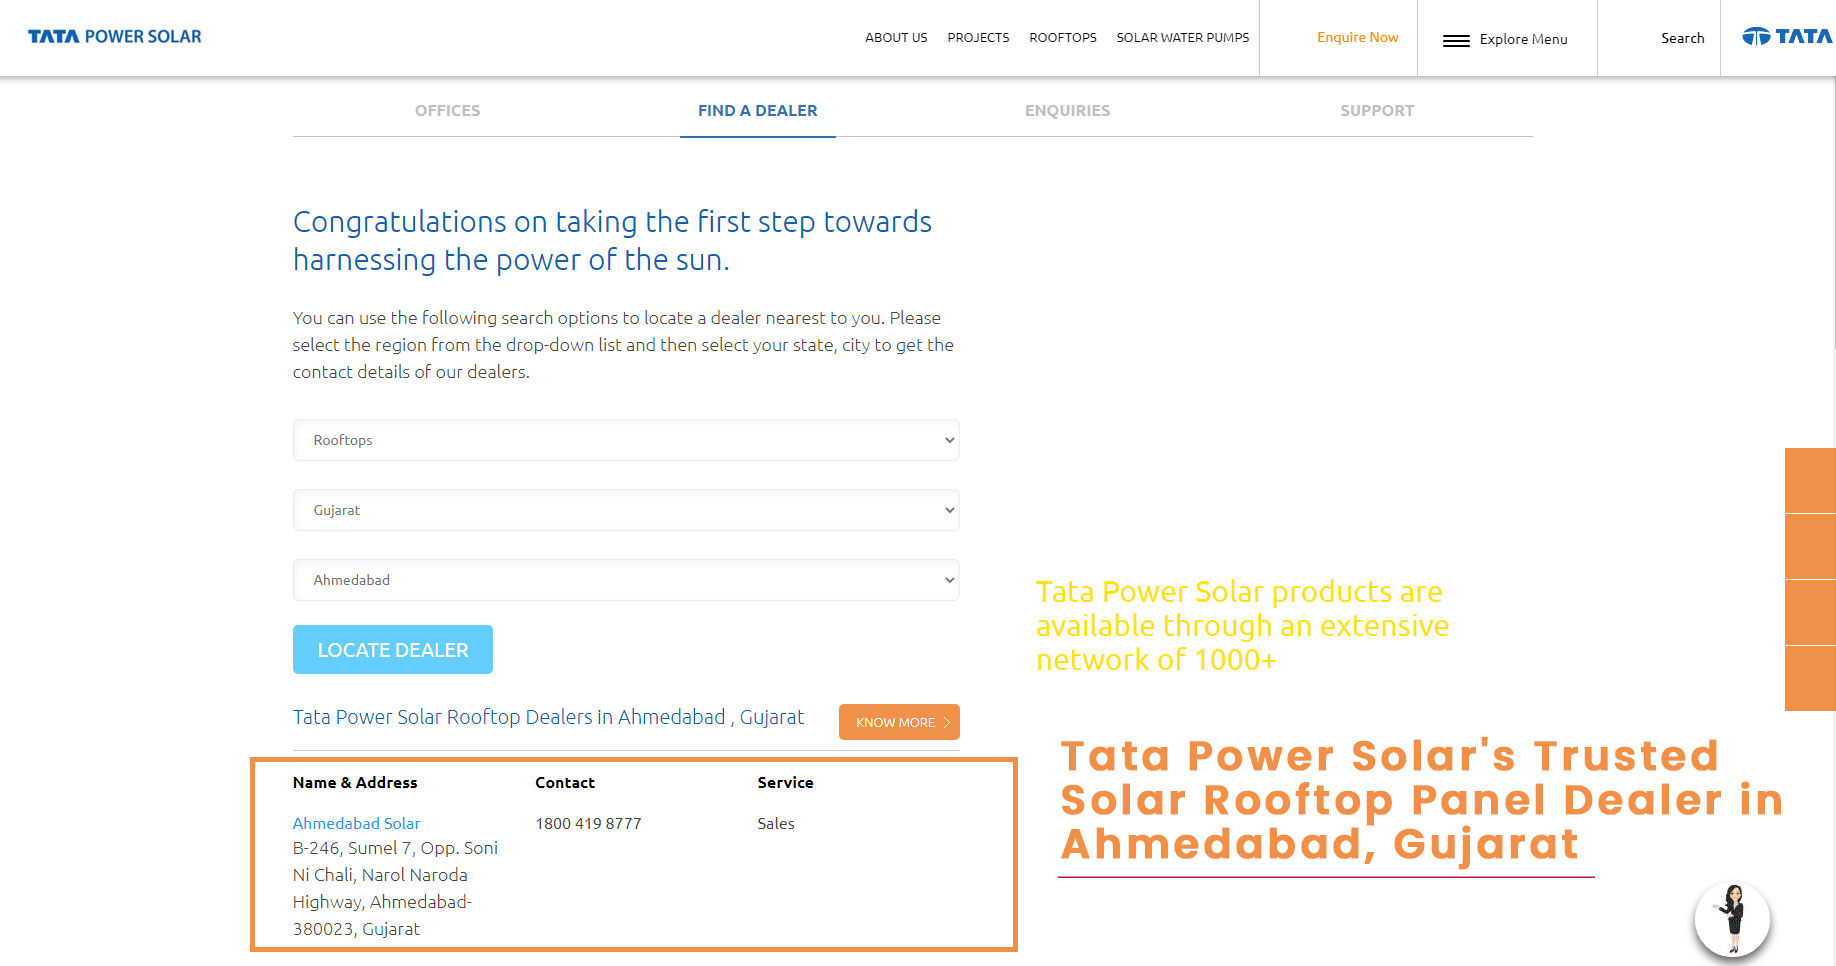 Tata Power Solar's Trusted Solar Rooftop Panel Dealer in Ahmedabad, Gujarat